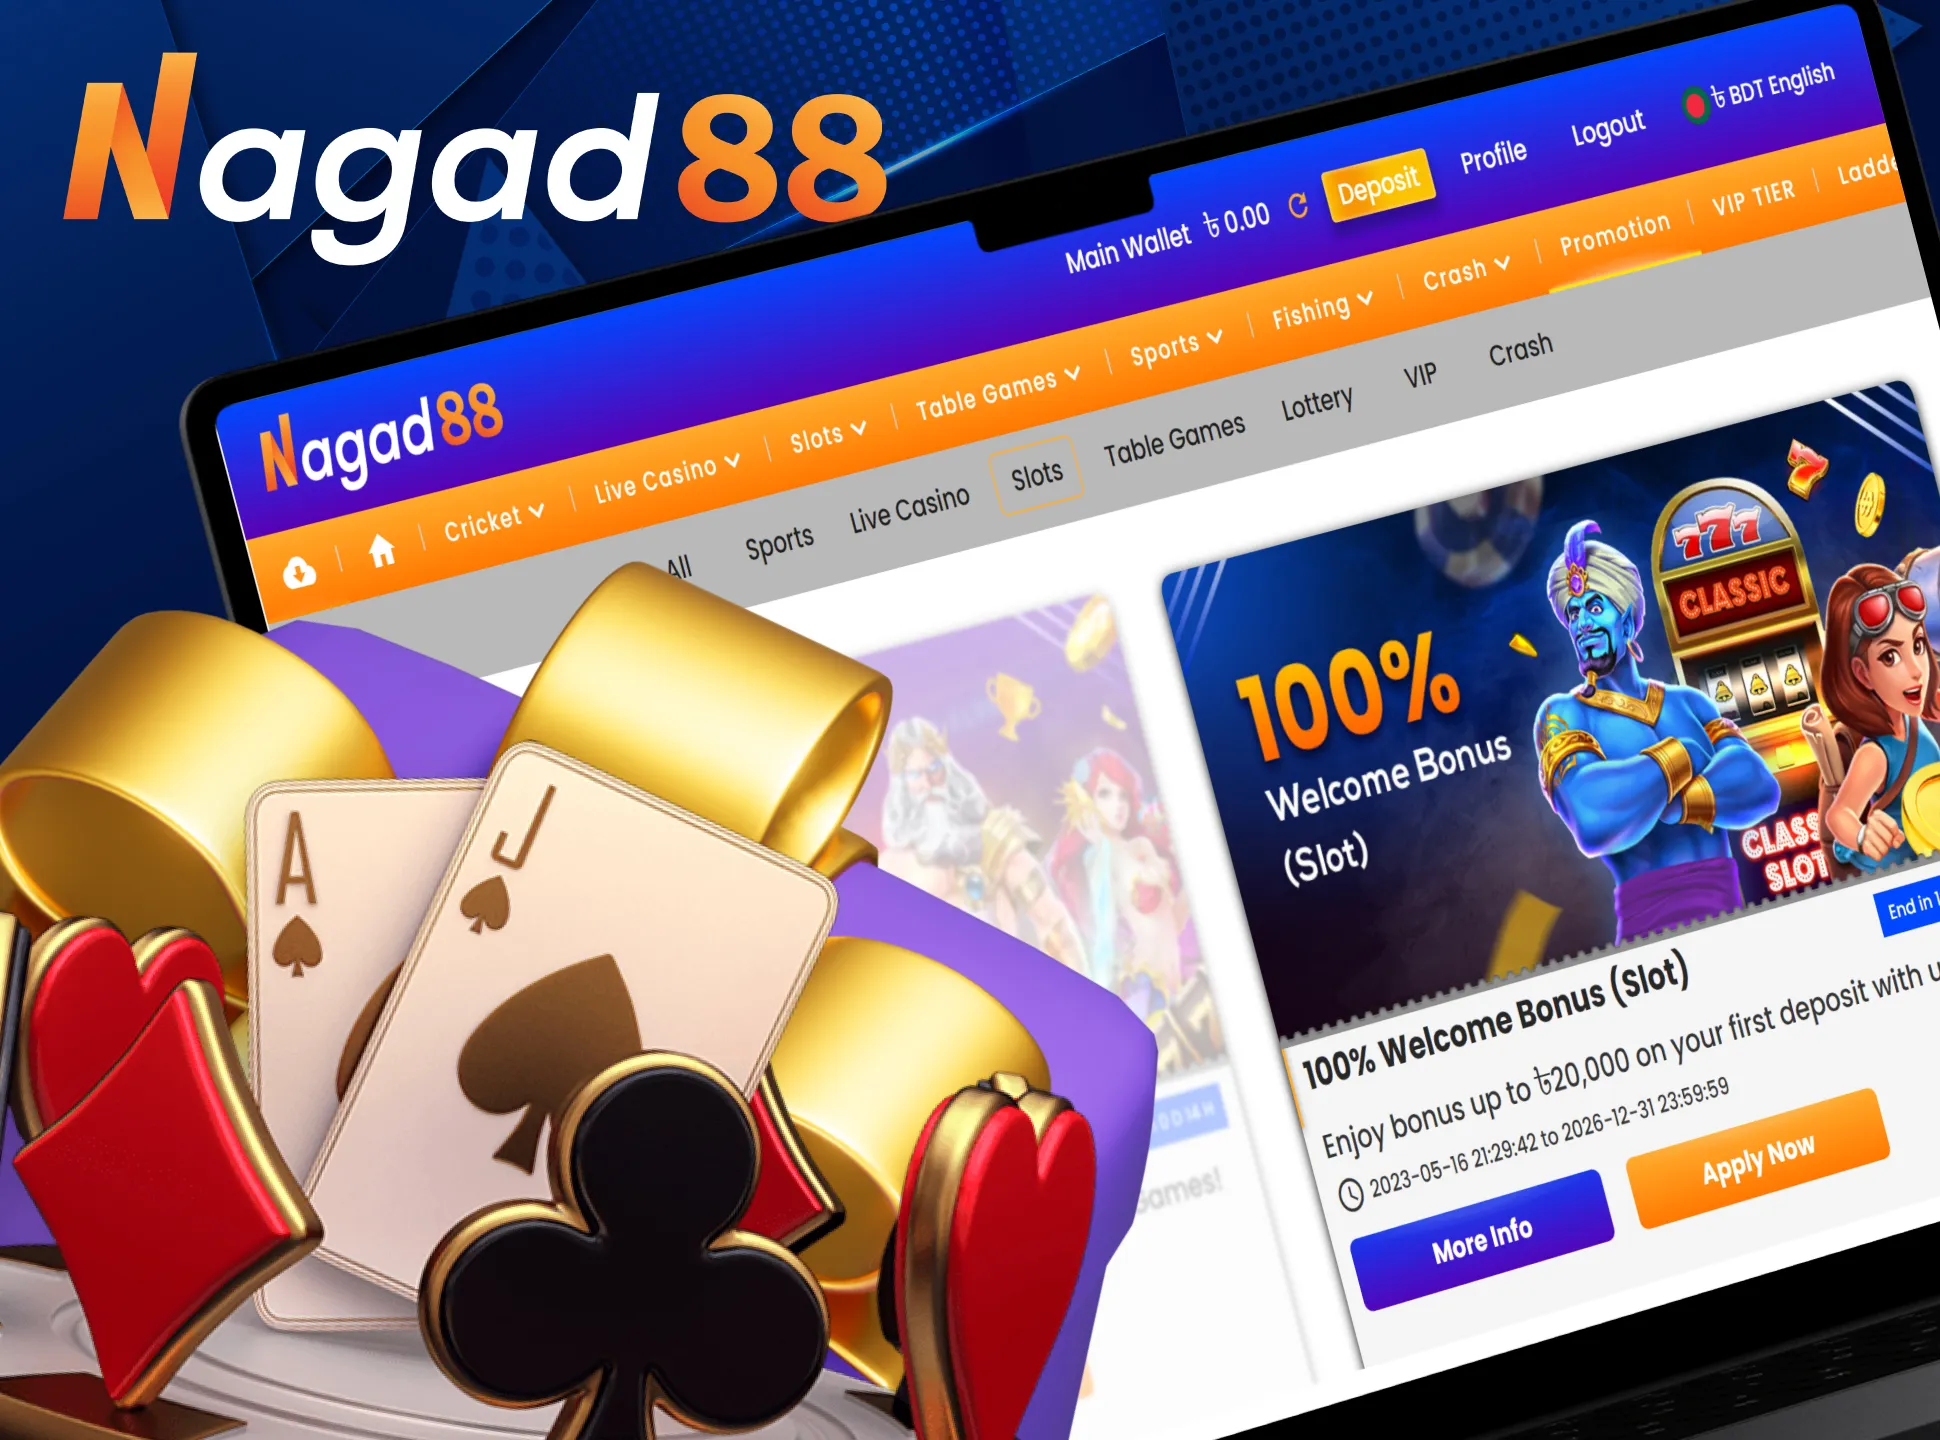 Get a profitable welcome casino bonus Nagad88 after registration.